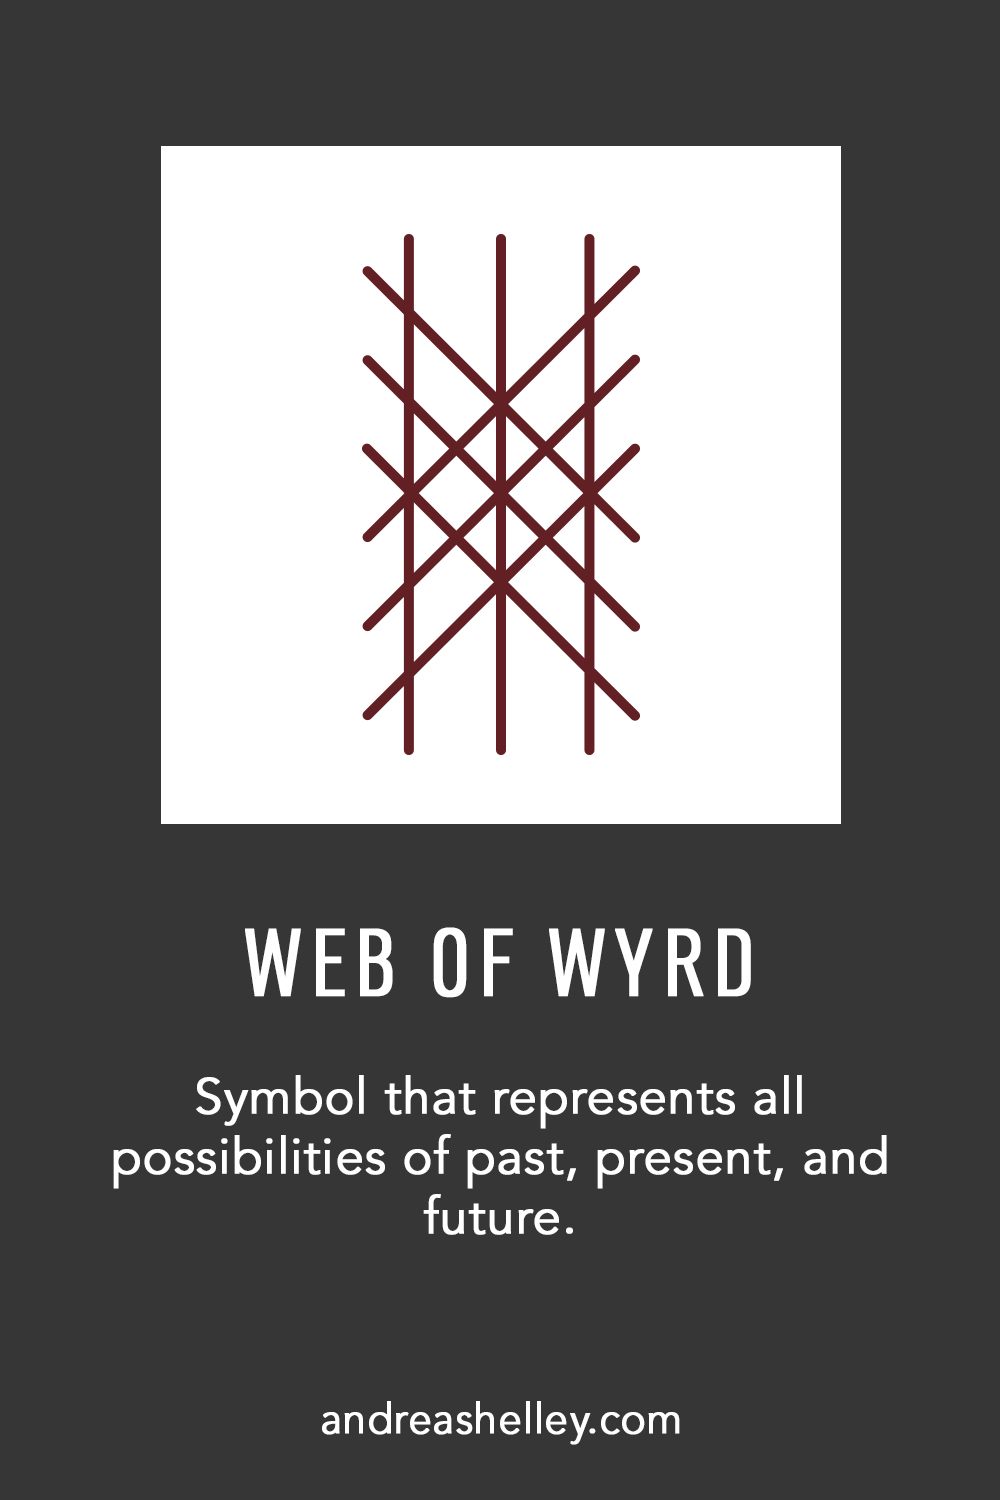 Web of Wyrd symbol represents fate